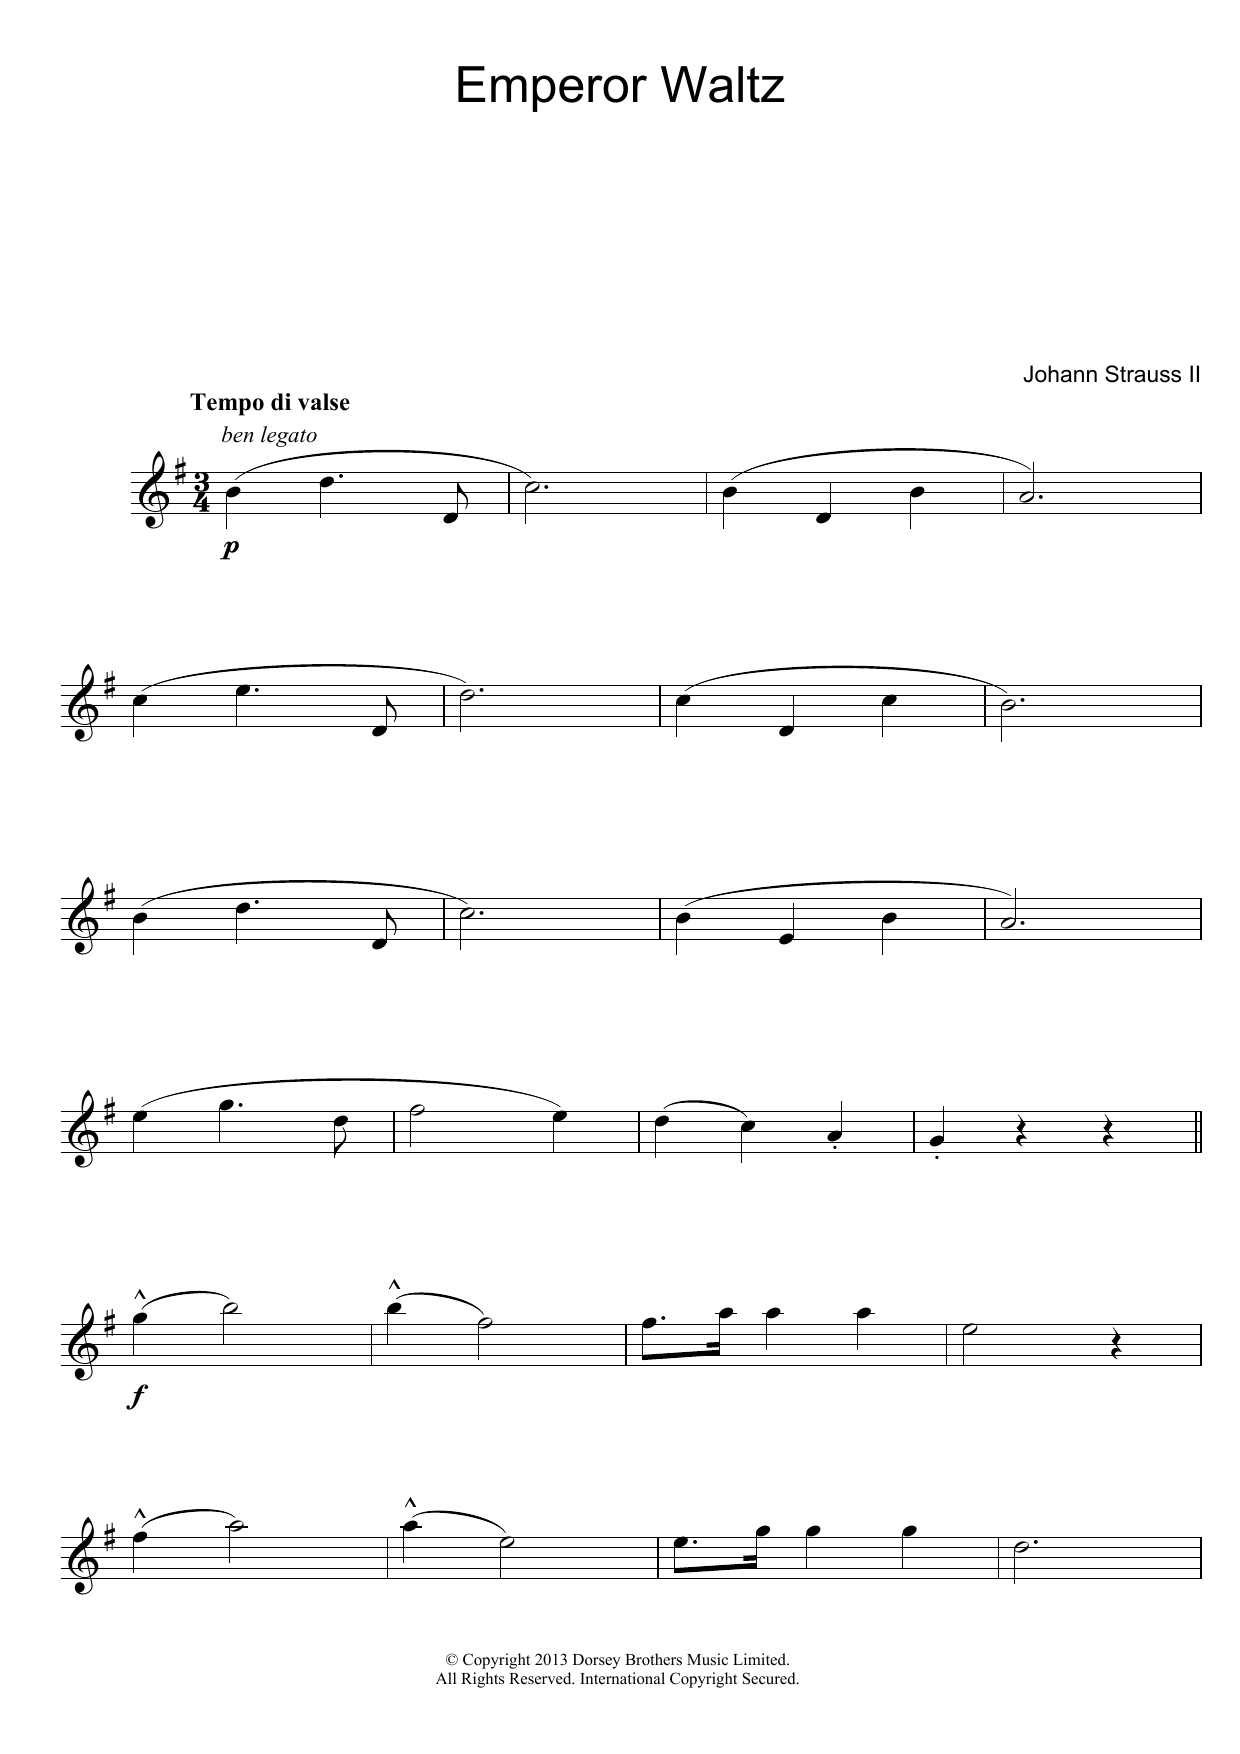 Download Johann Strauss II Emperor Waltz Sheet Music